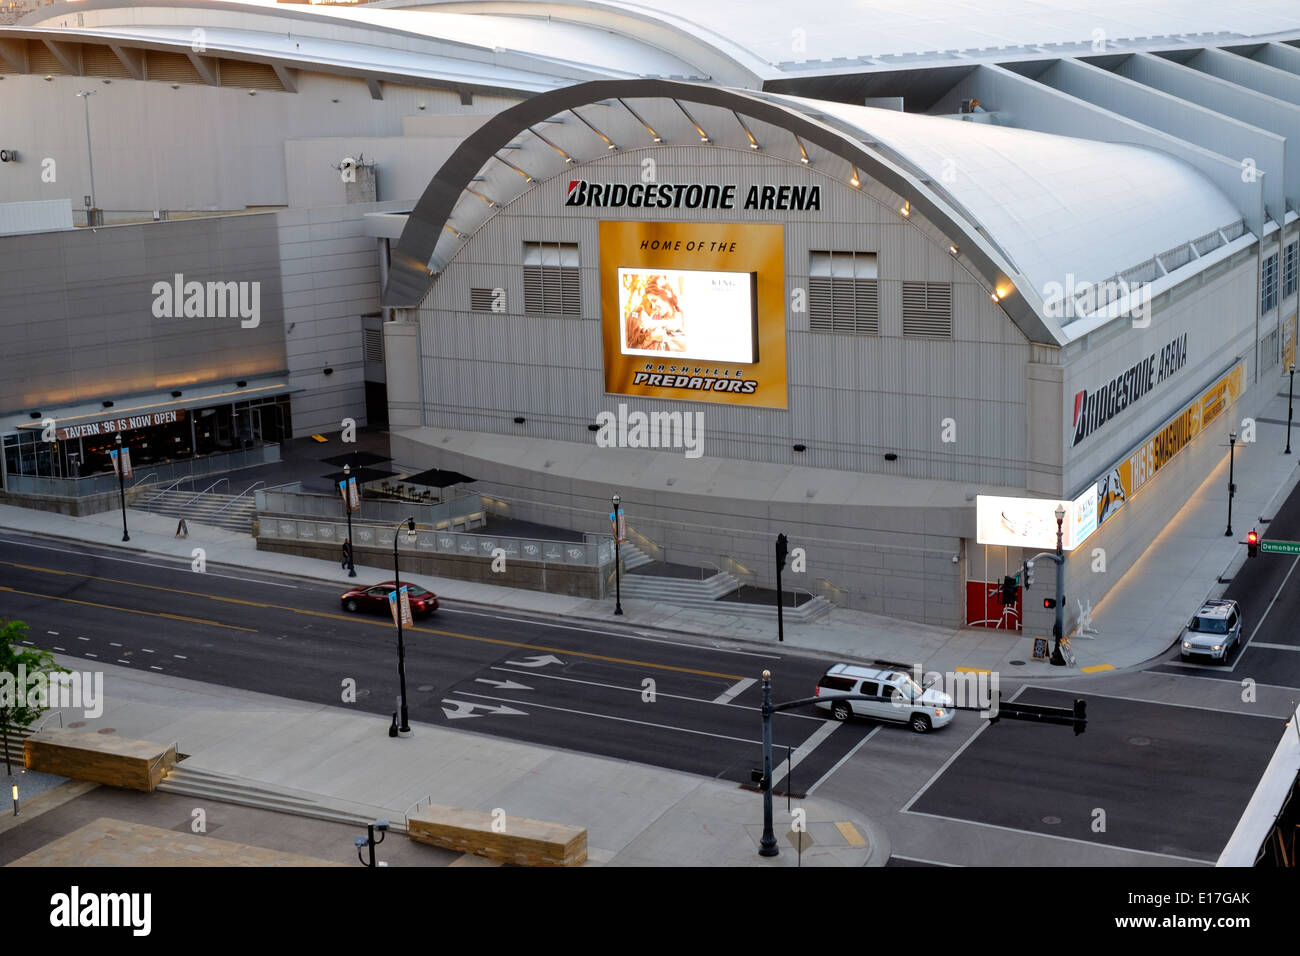 Bridgestone arena nashville arena hi-res stock photography and images -  Alamy